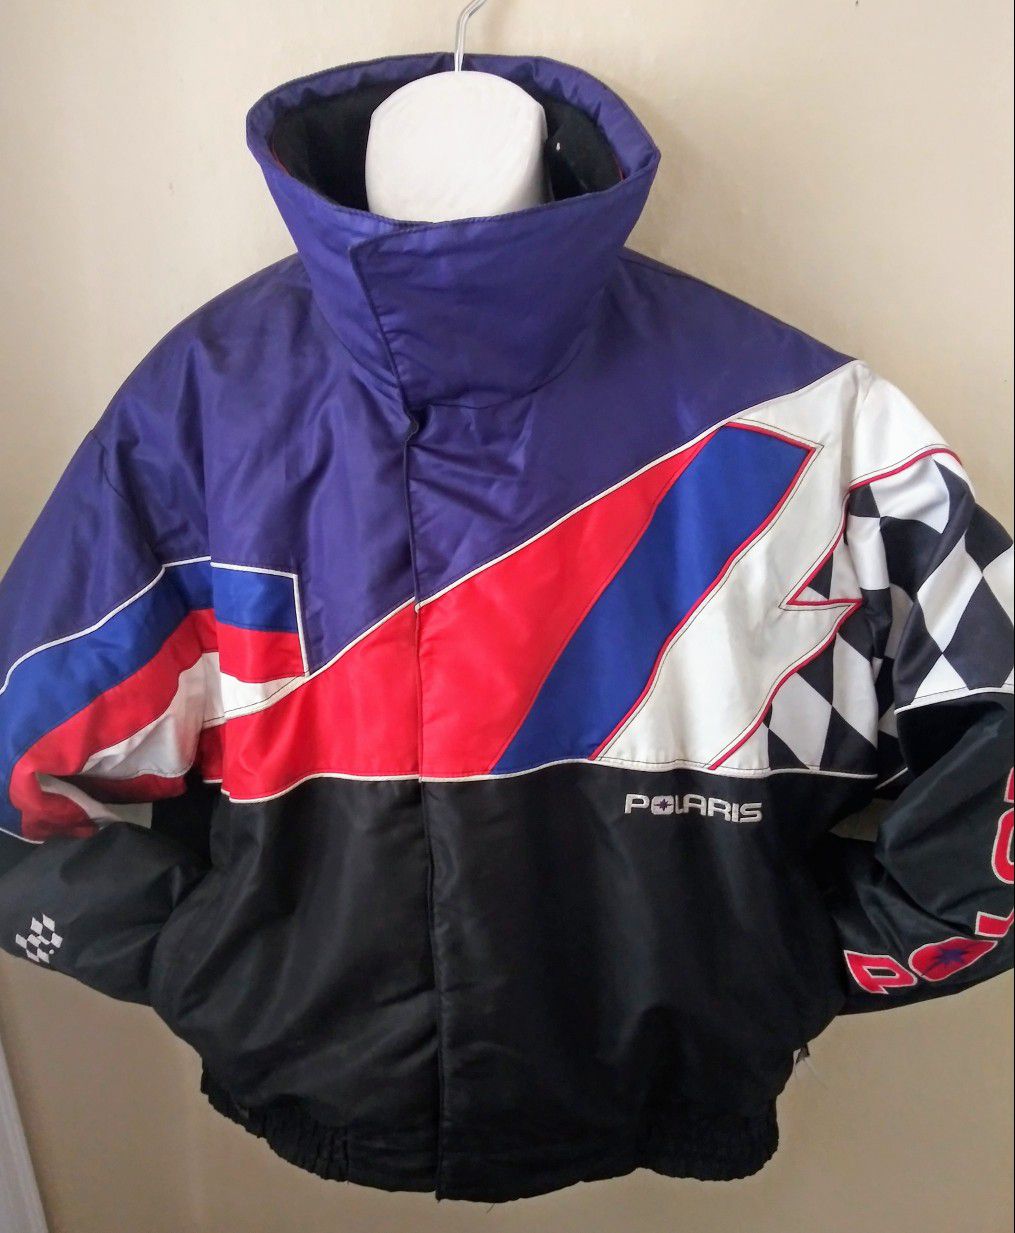 L* VTG* Polaris Indy snowmobile jacket